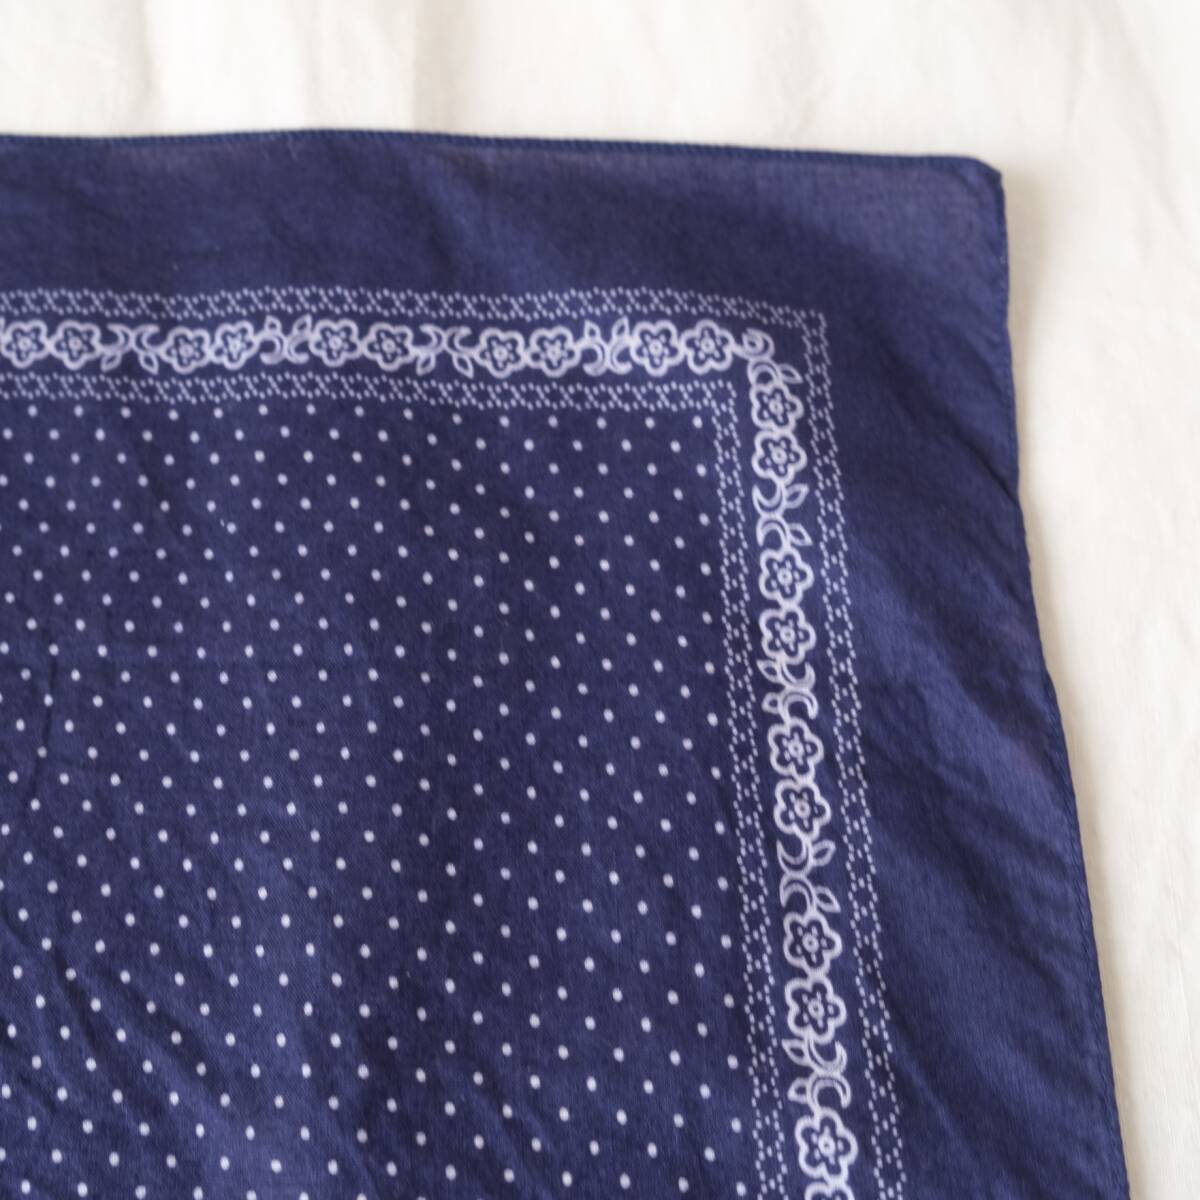  dead stock [ Europe Vintage ] cotton dot pattern bandana / navy white navy blue white series / France Work 